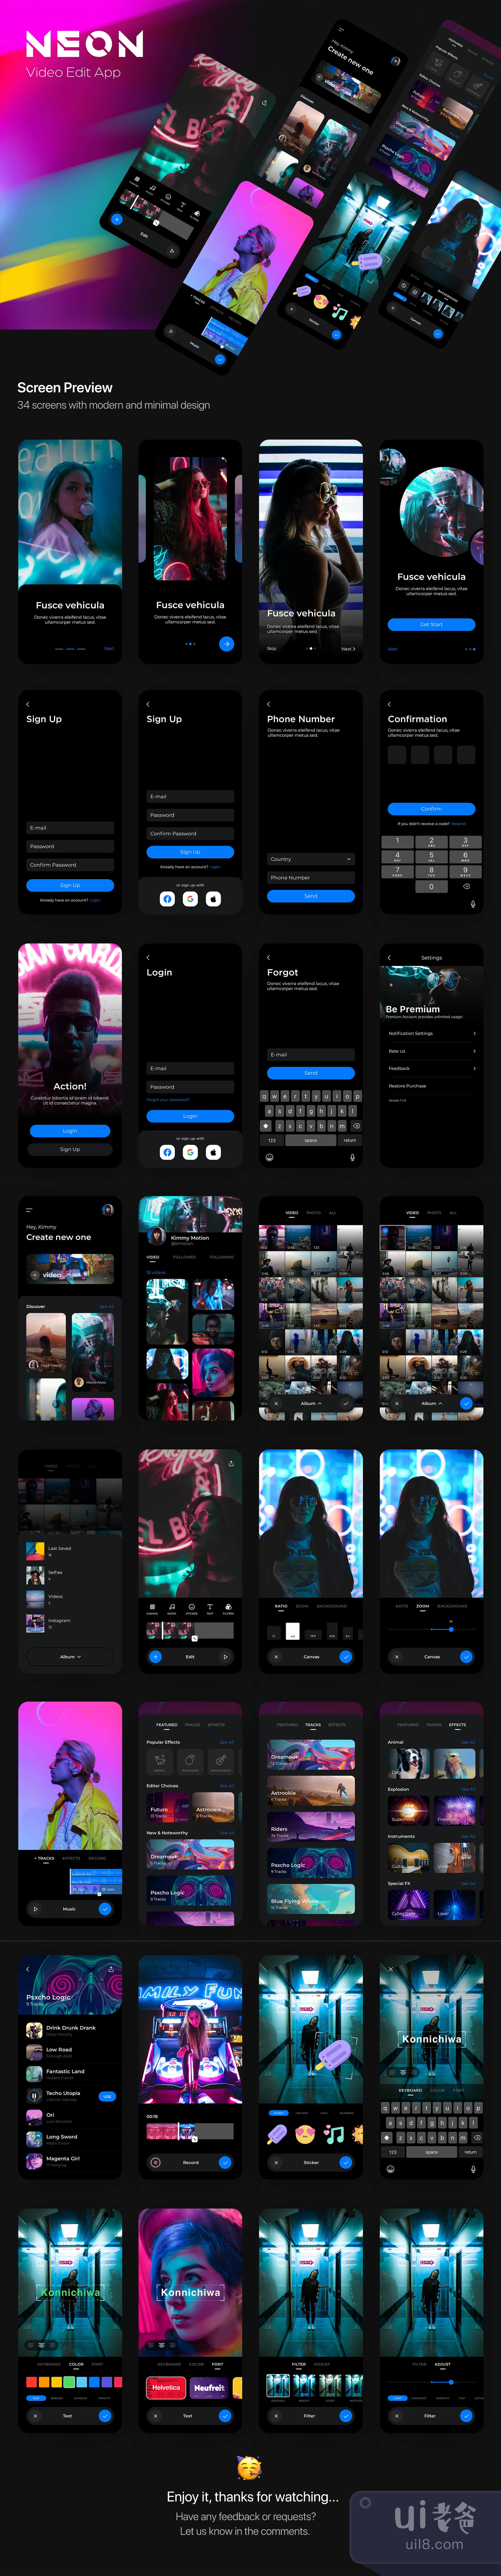 霓虹灯视频编辑应用UI包 (Neon Video Edit App UI Kit)插图